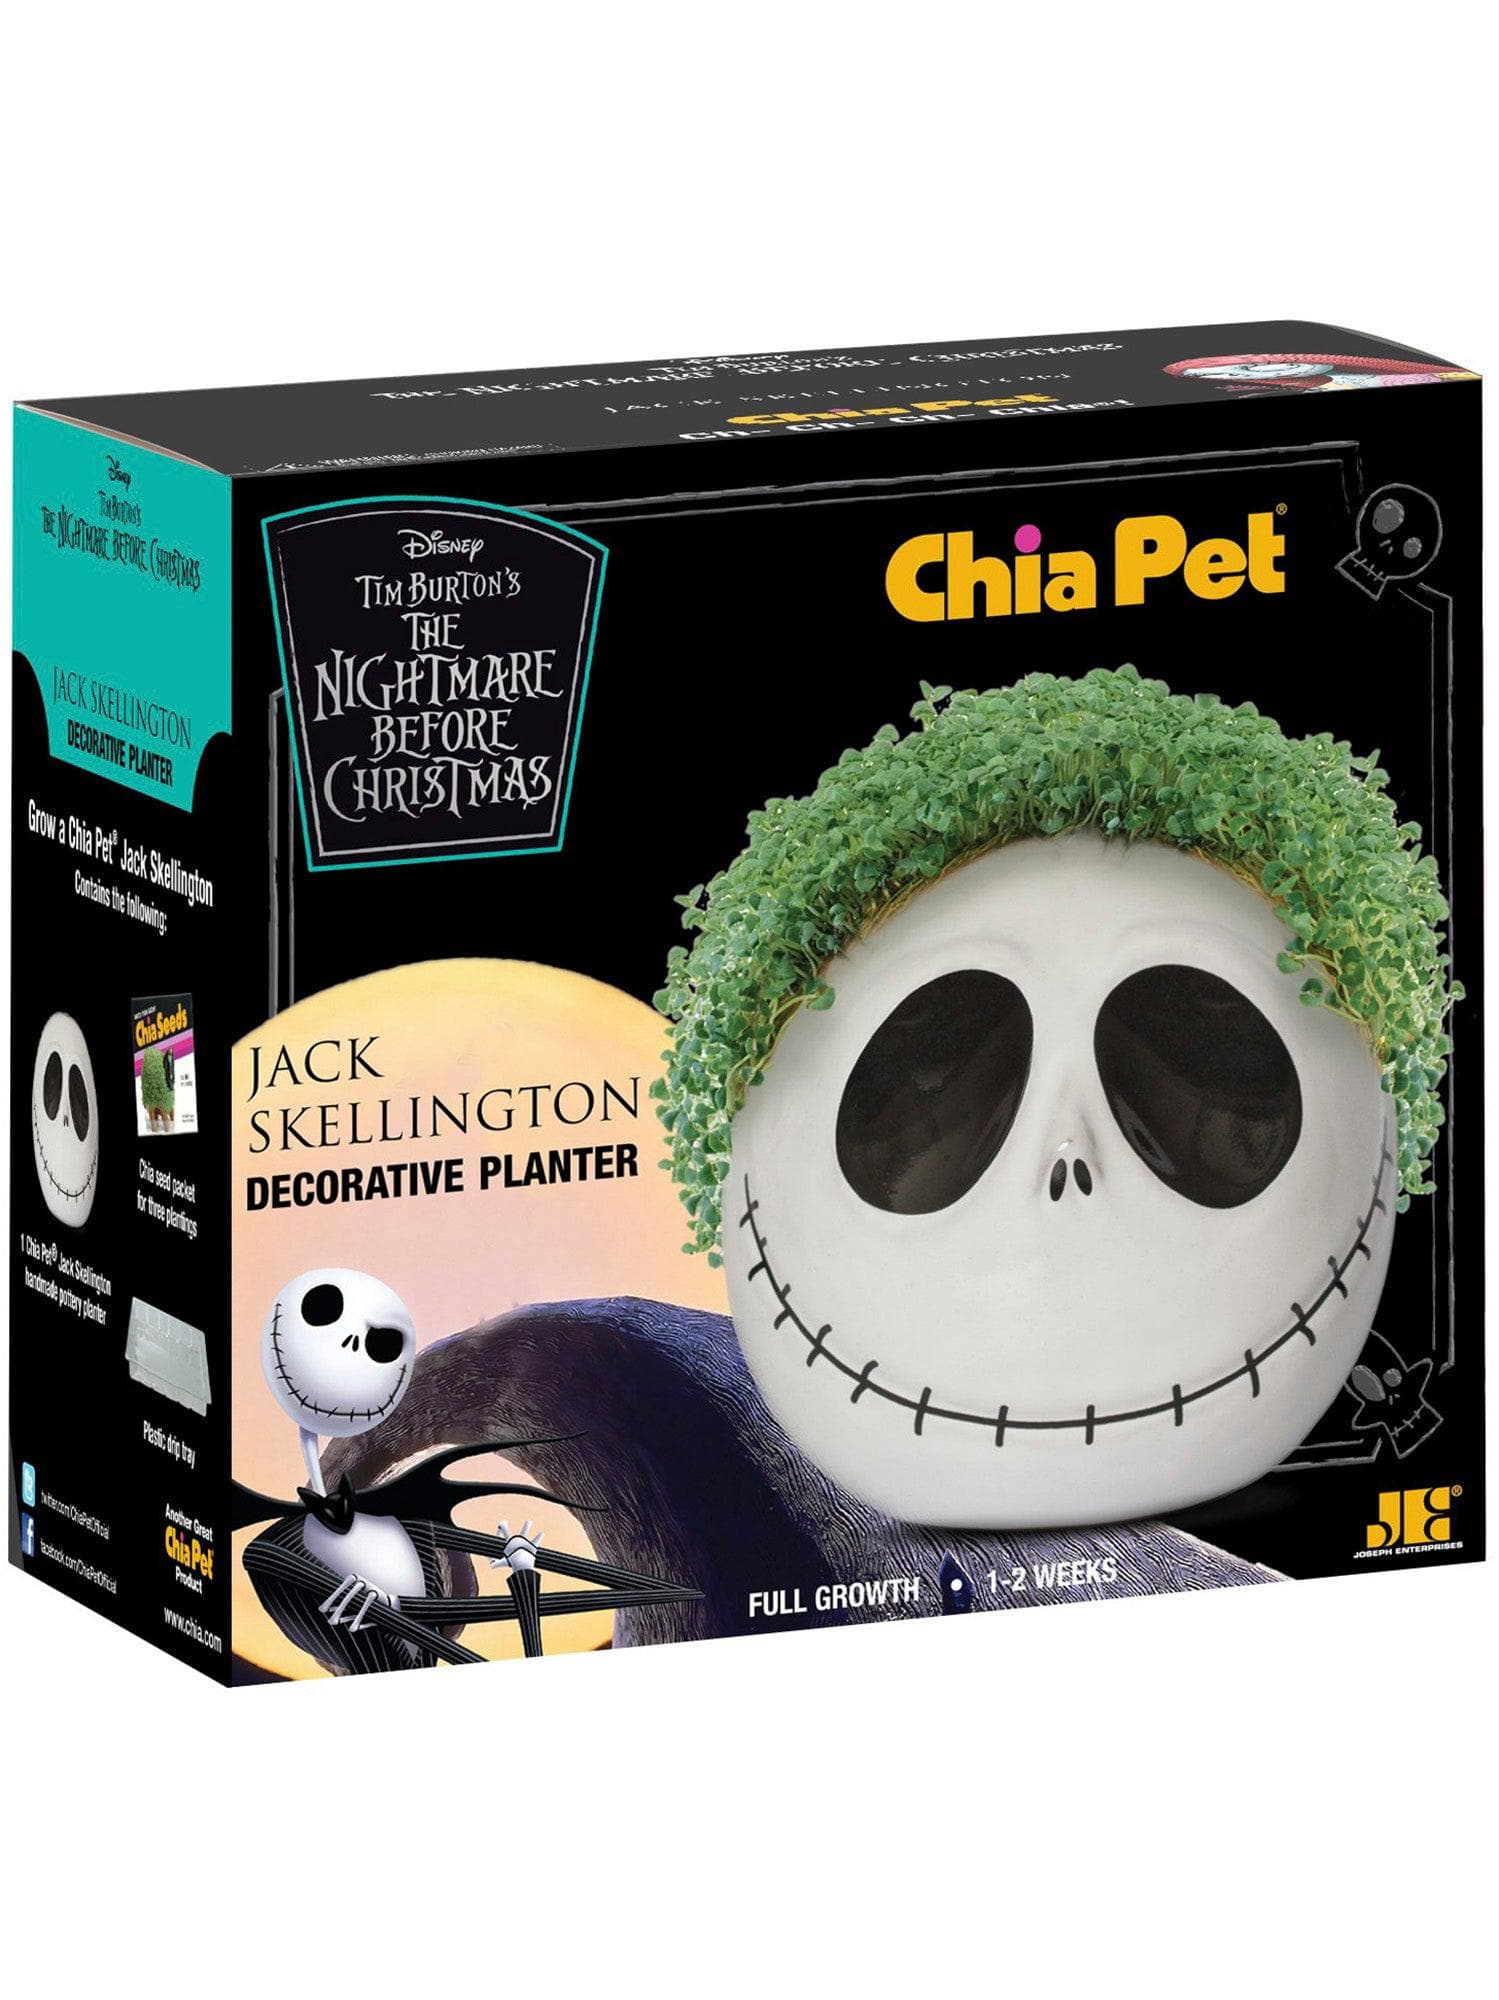 Chia Pet - Jack Skellington (Nightmare before Christmas) - Decorative Planter - costumes.com